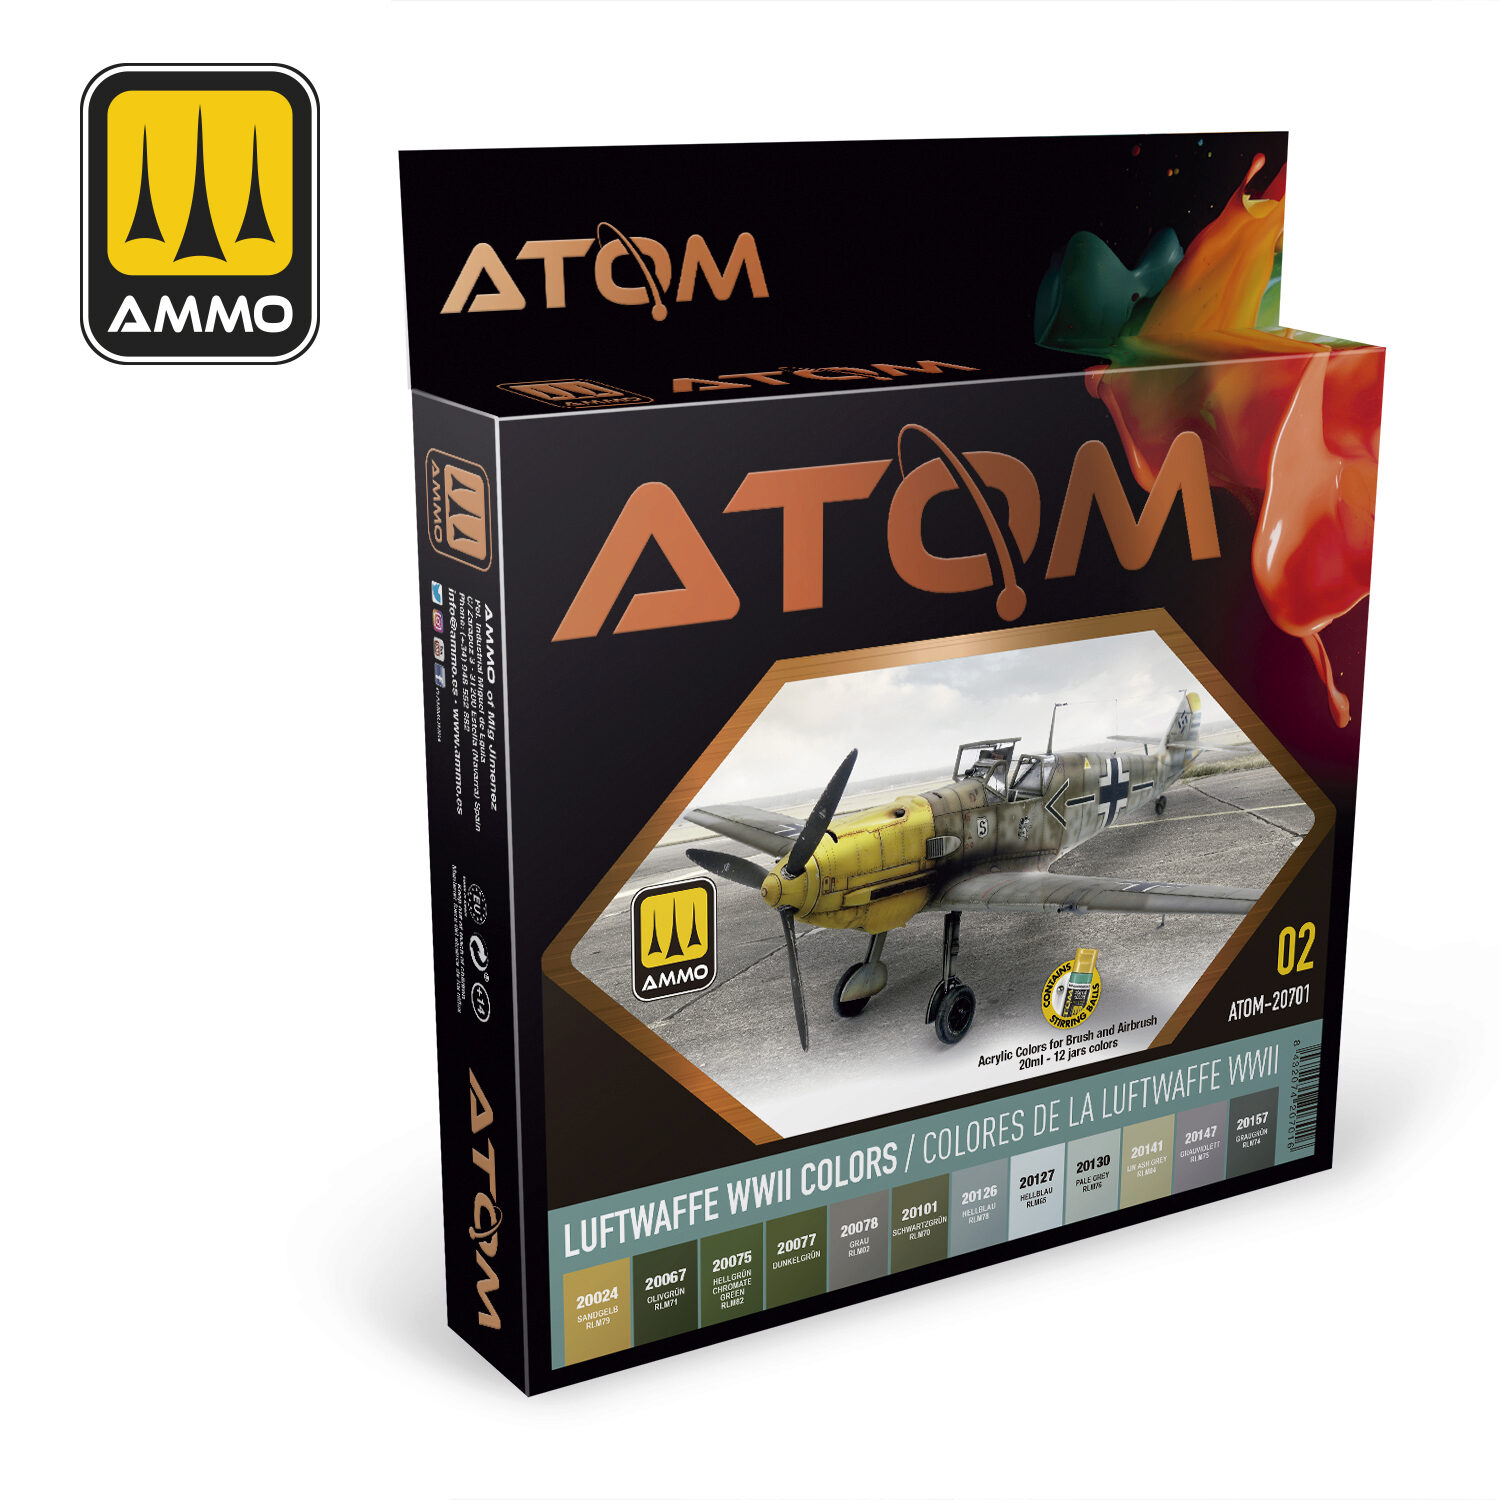 Ammo ATOM-20701 ATOM-Luftwaffe WWII Colors